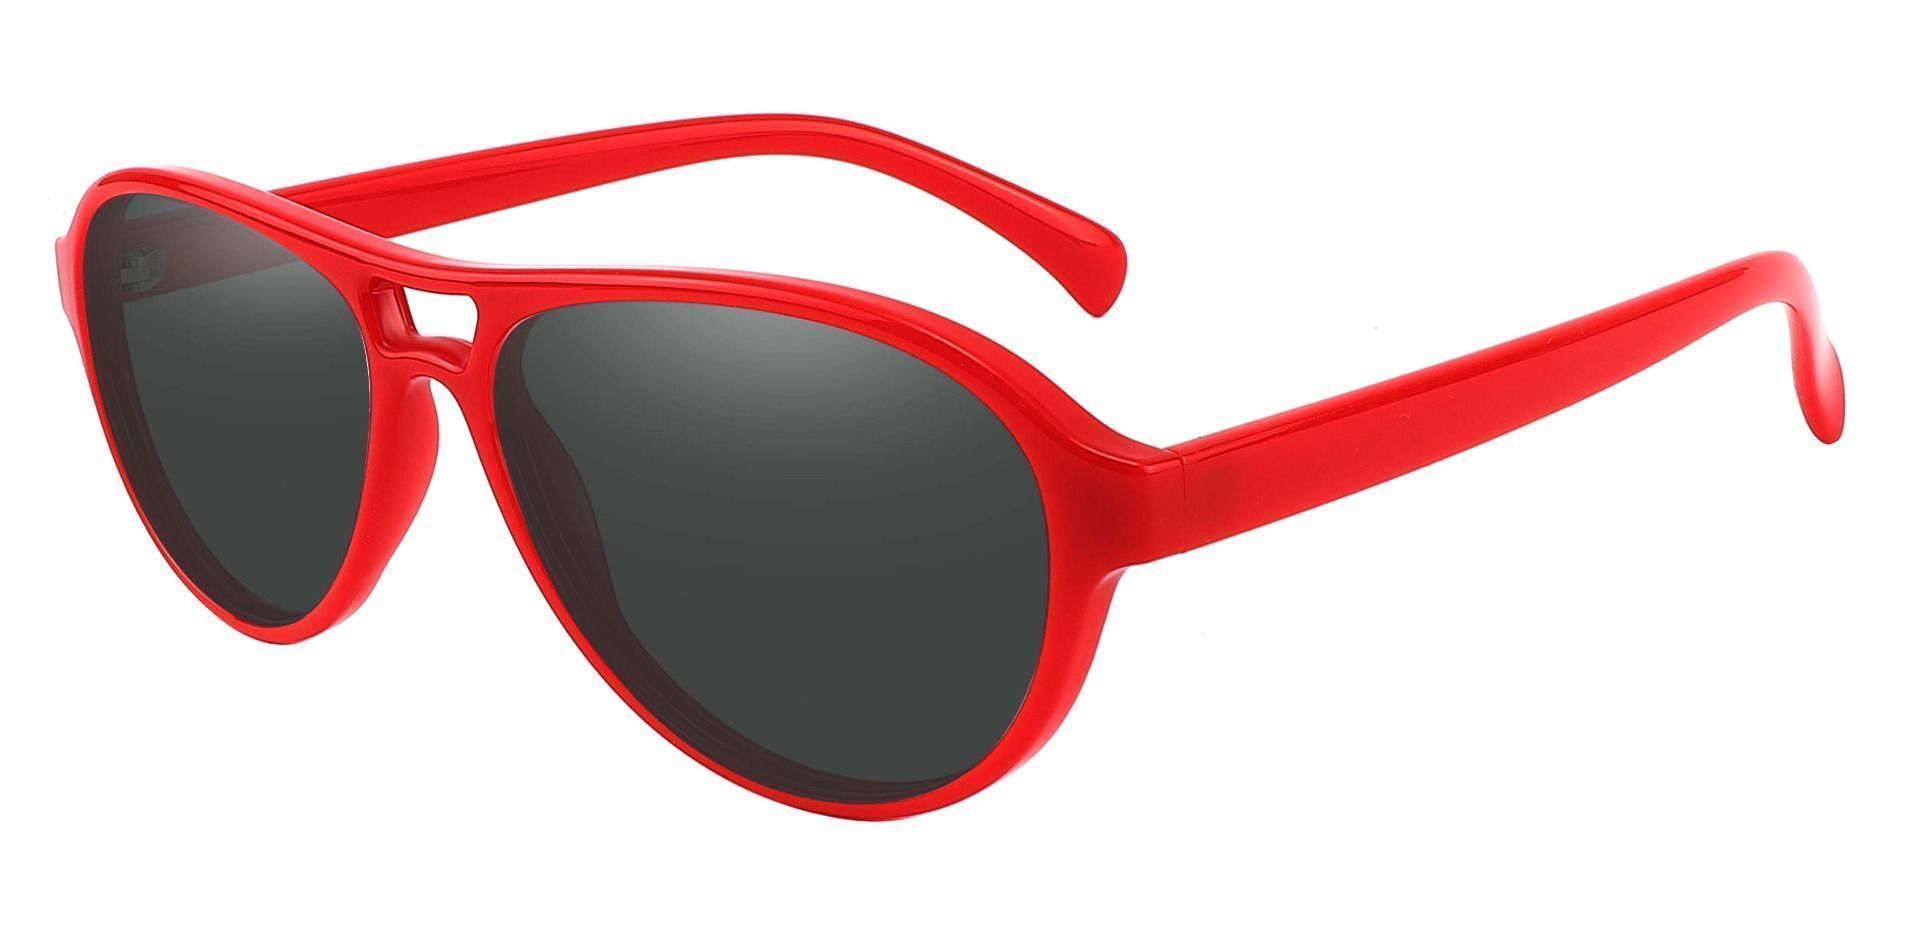 Sosa Aviator Reading Sunglasses - Red Frame With Gray Lenses